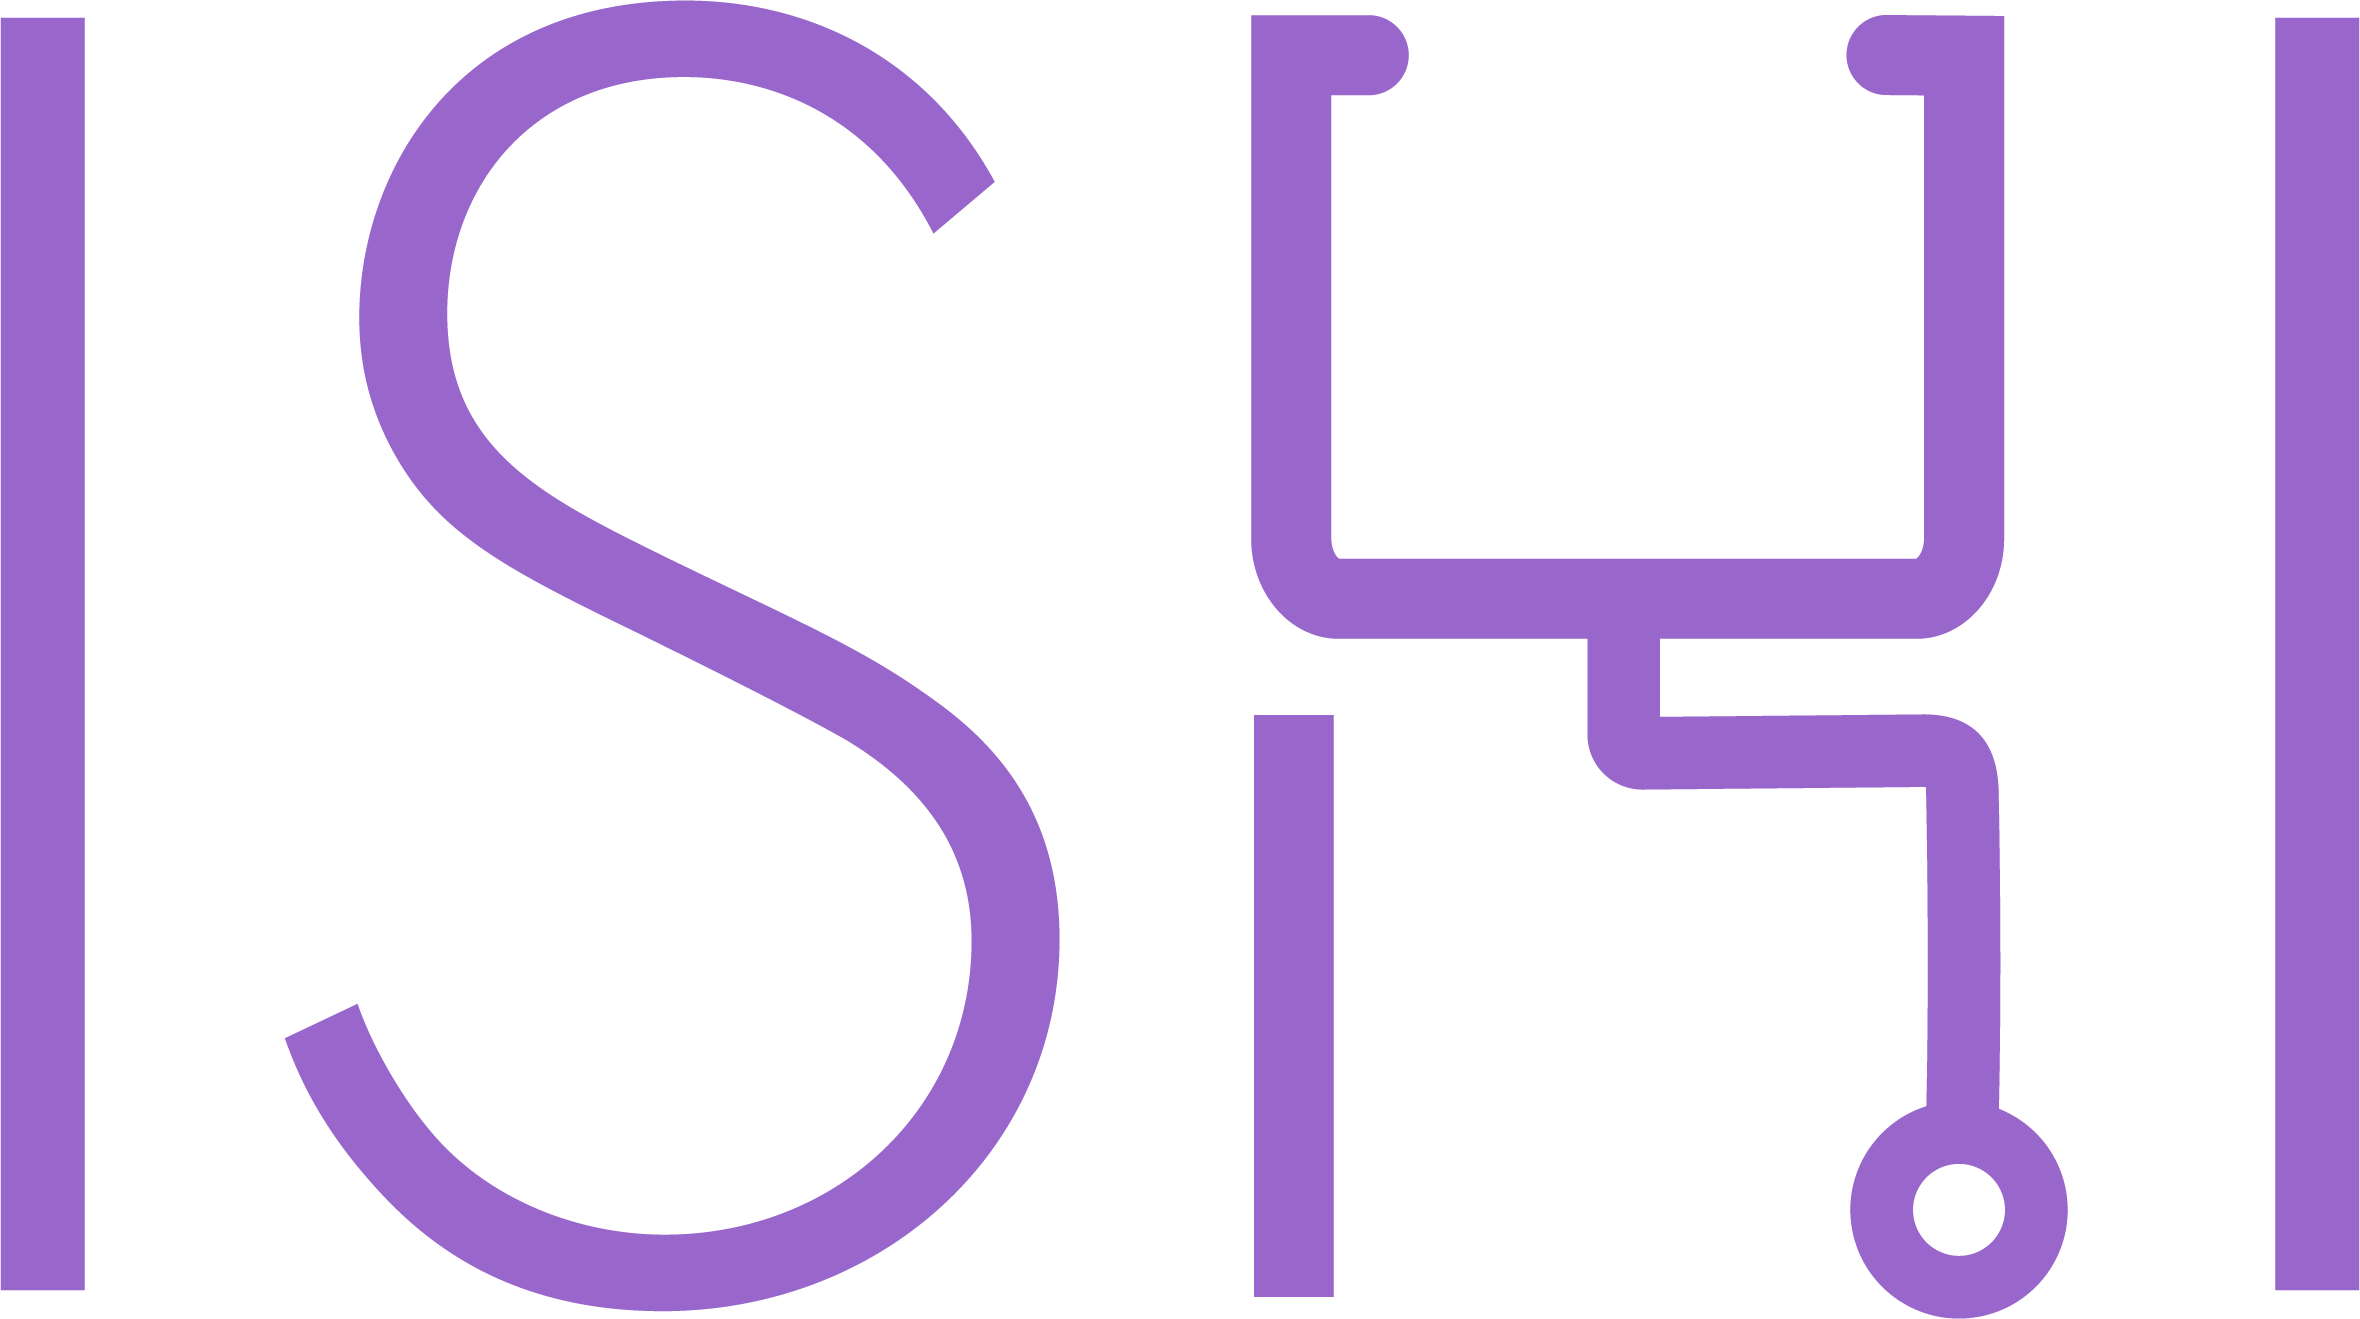 ishi_logo_purple_transparent - updated 11.3.22